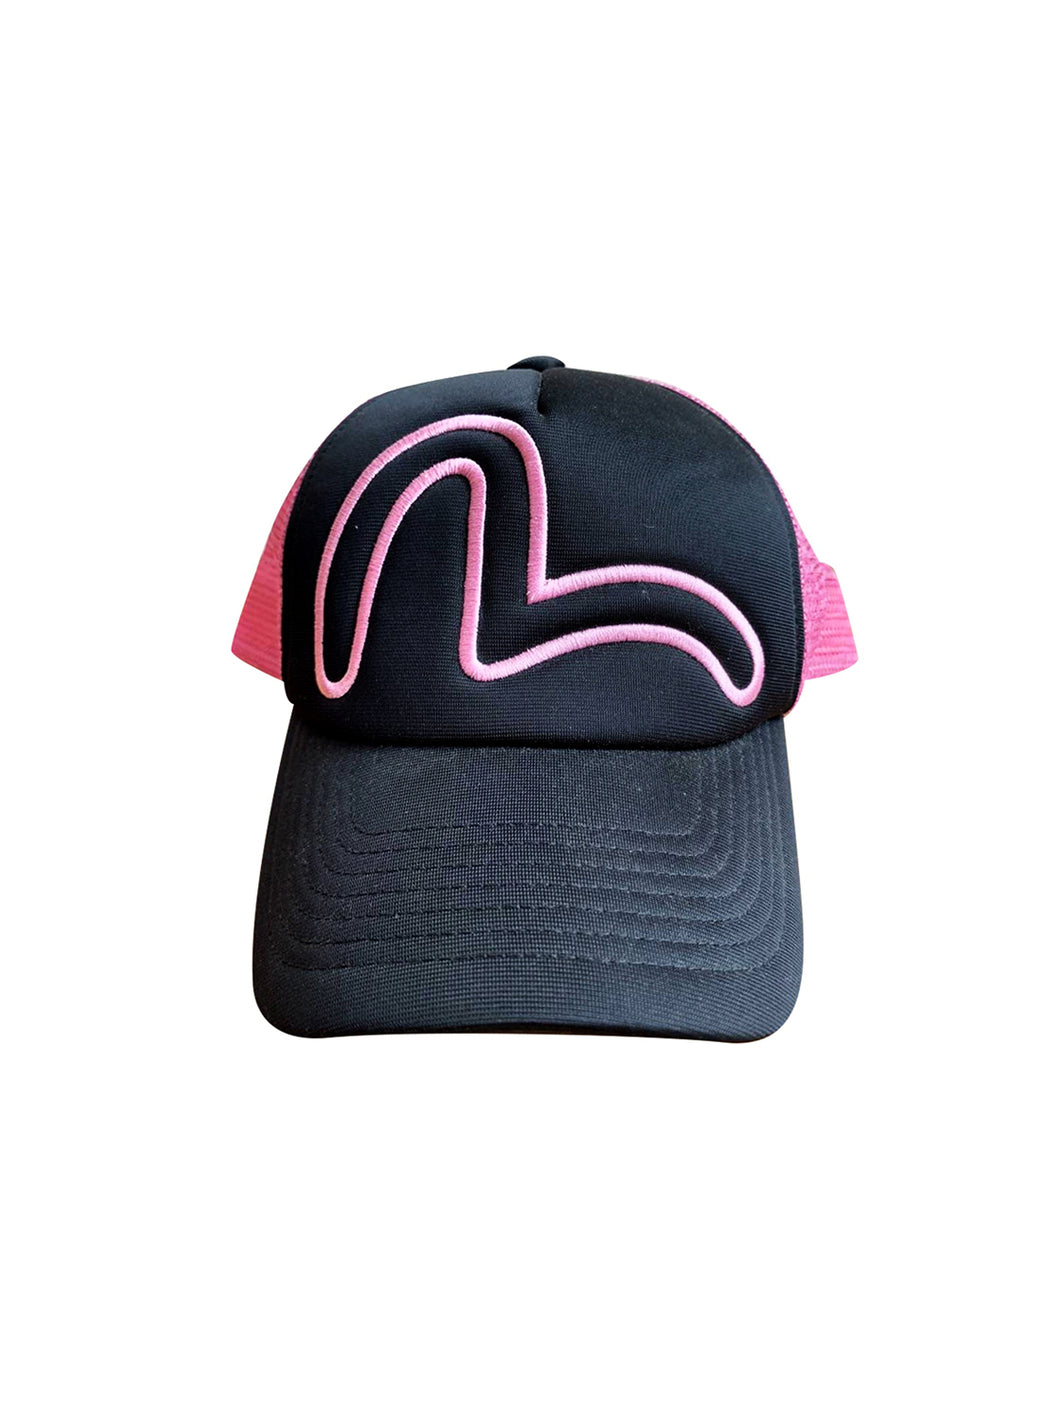 Evisu Pink and Black Hat